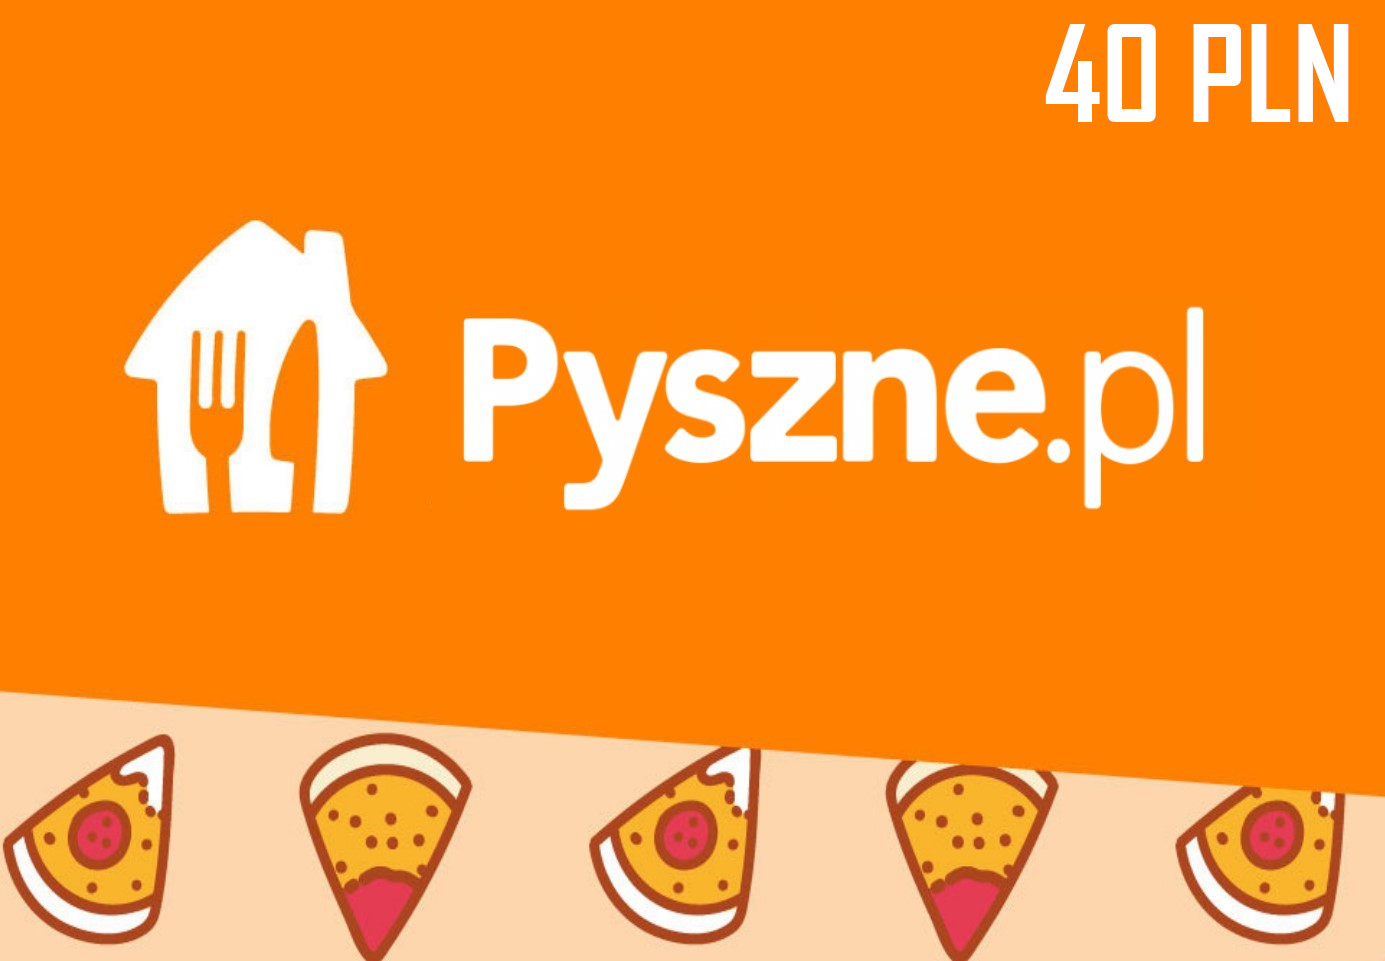 Pyszne.pl 40 PLN Gift Card PL, 11.82$